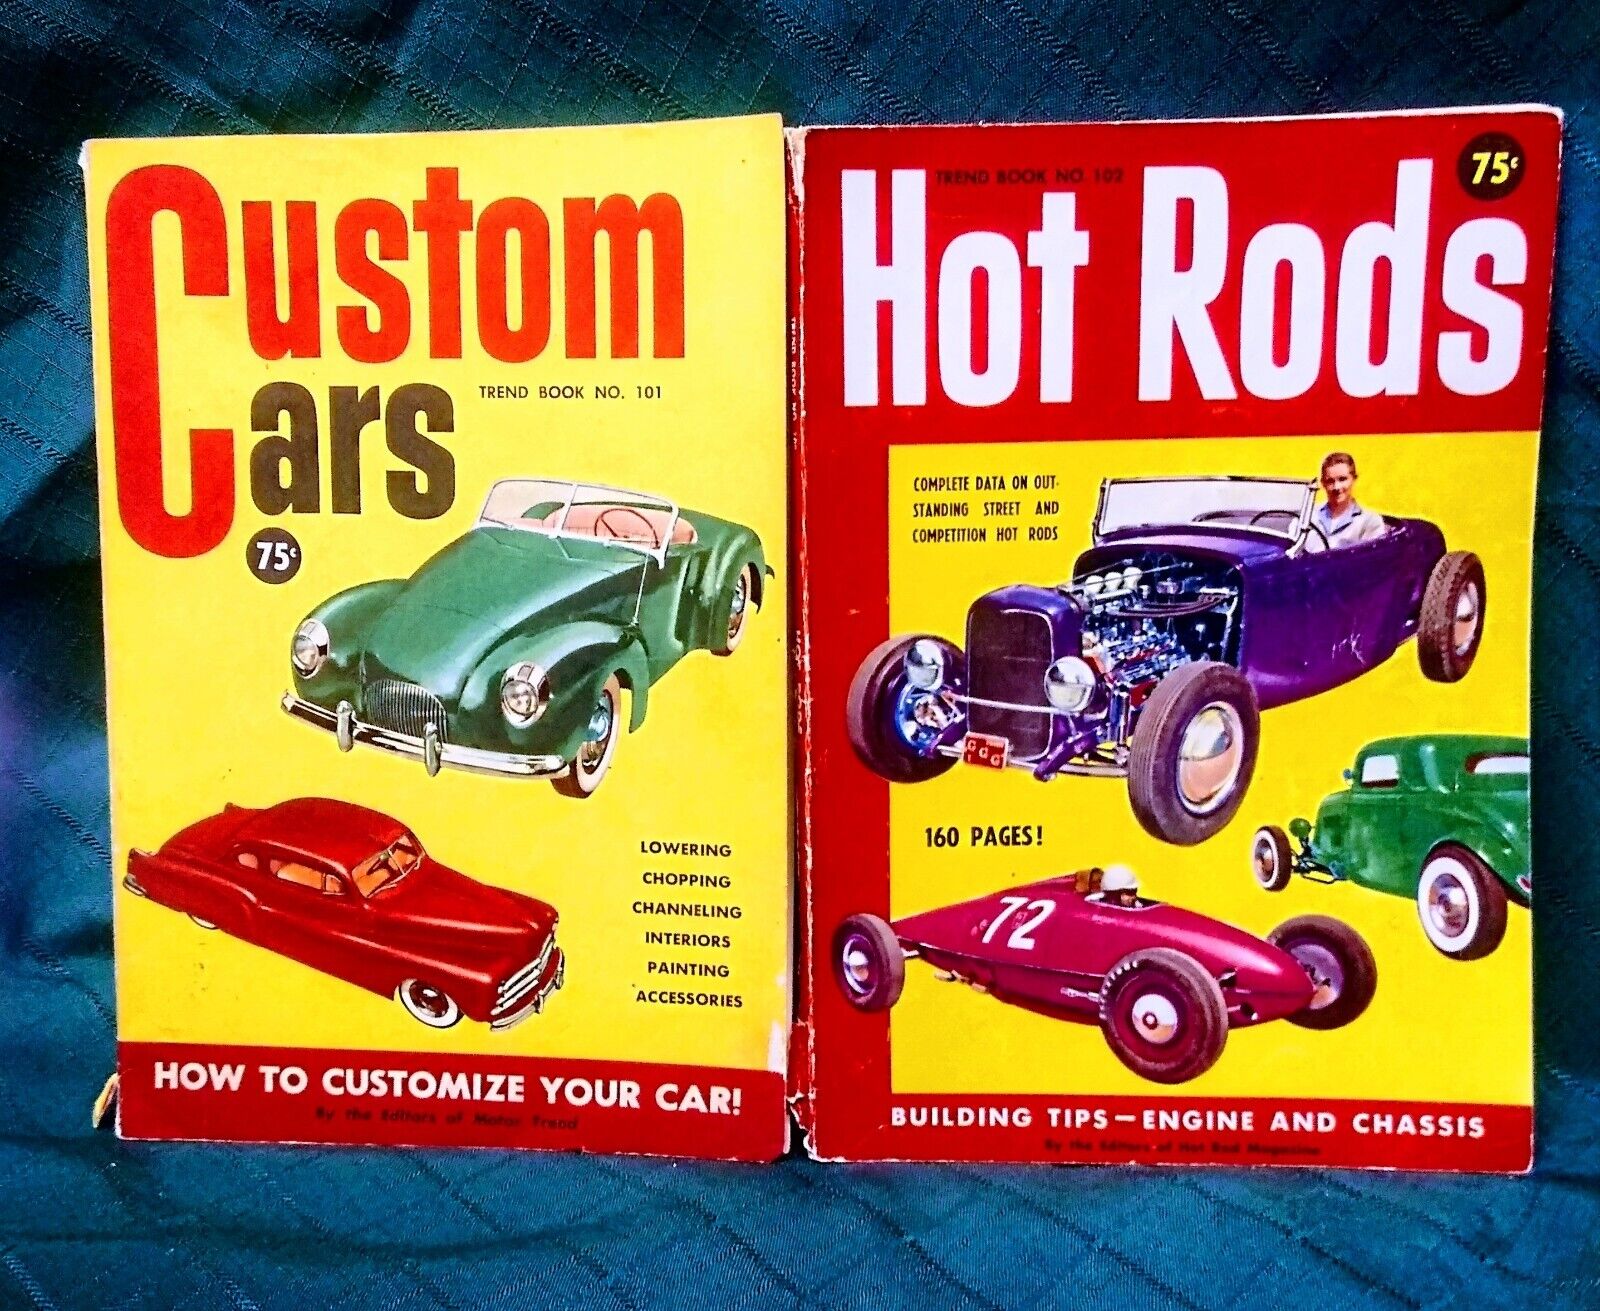 2 Vintage Car Magazines 1951 - CUSTOM CARS  & HOT RODS  Trend Books